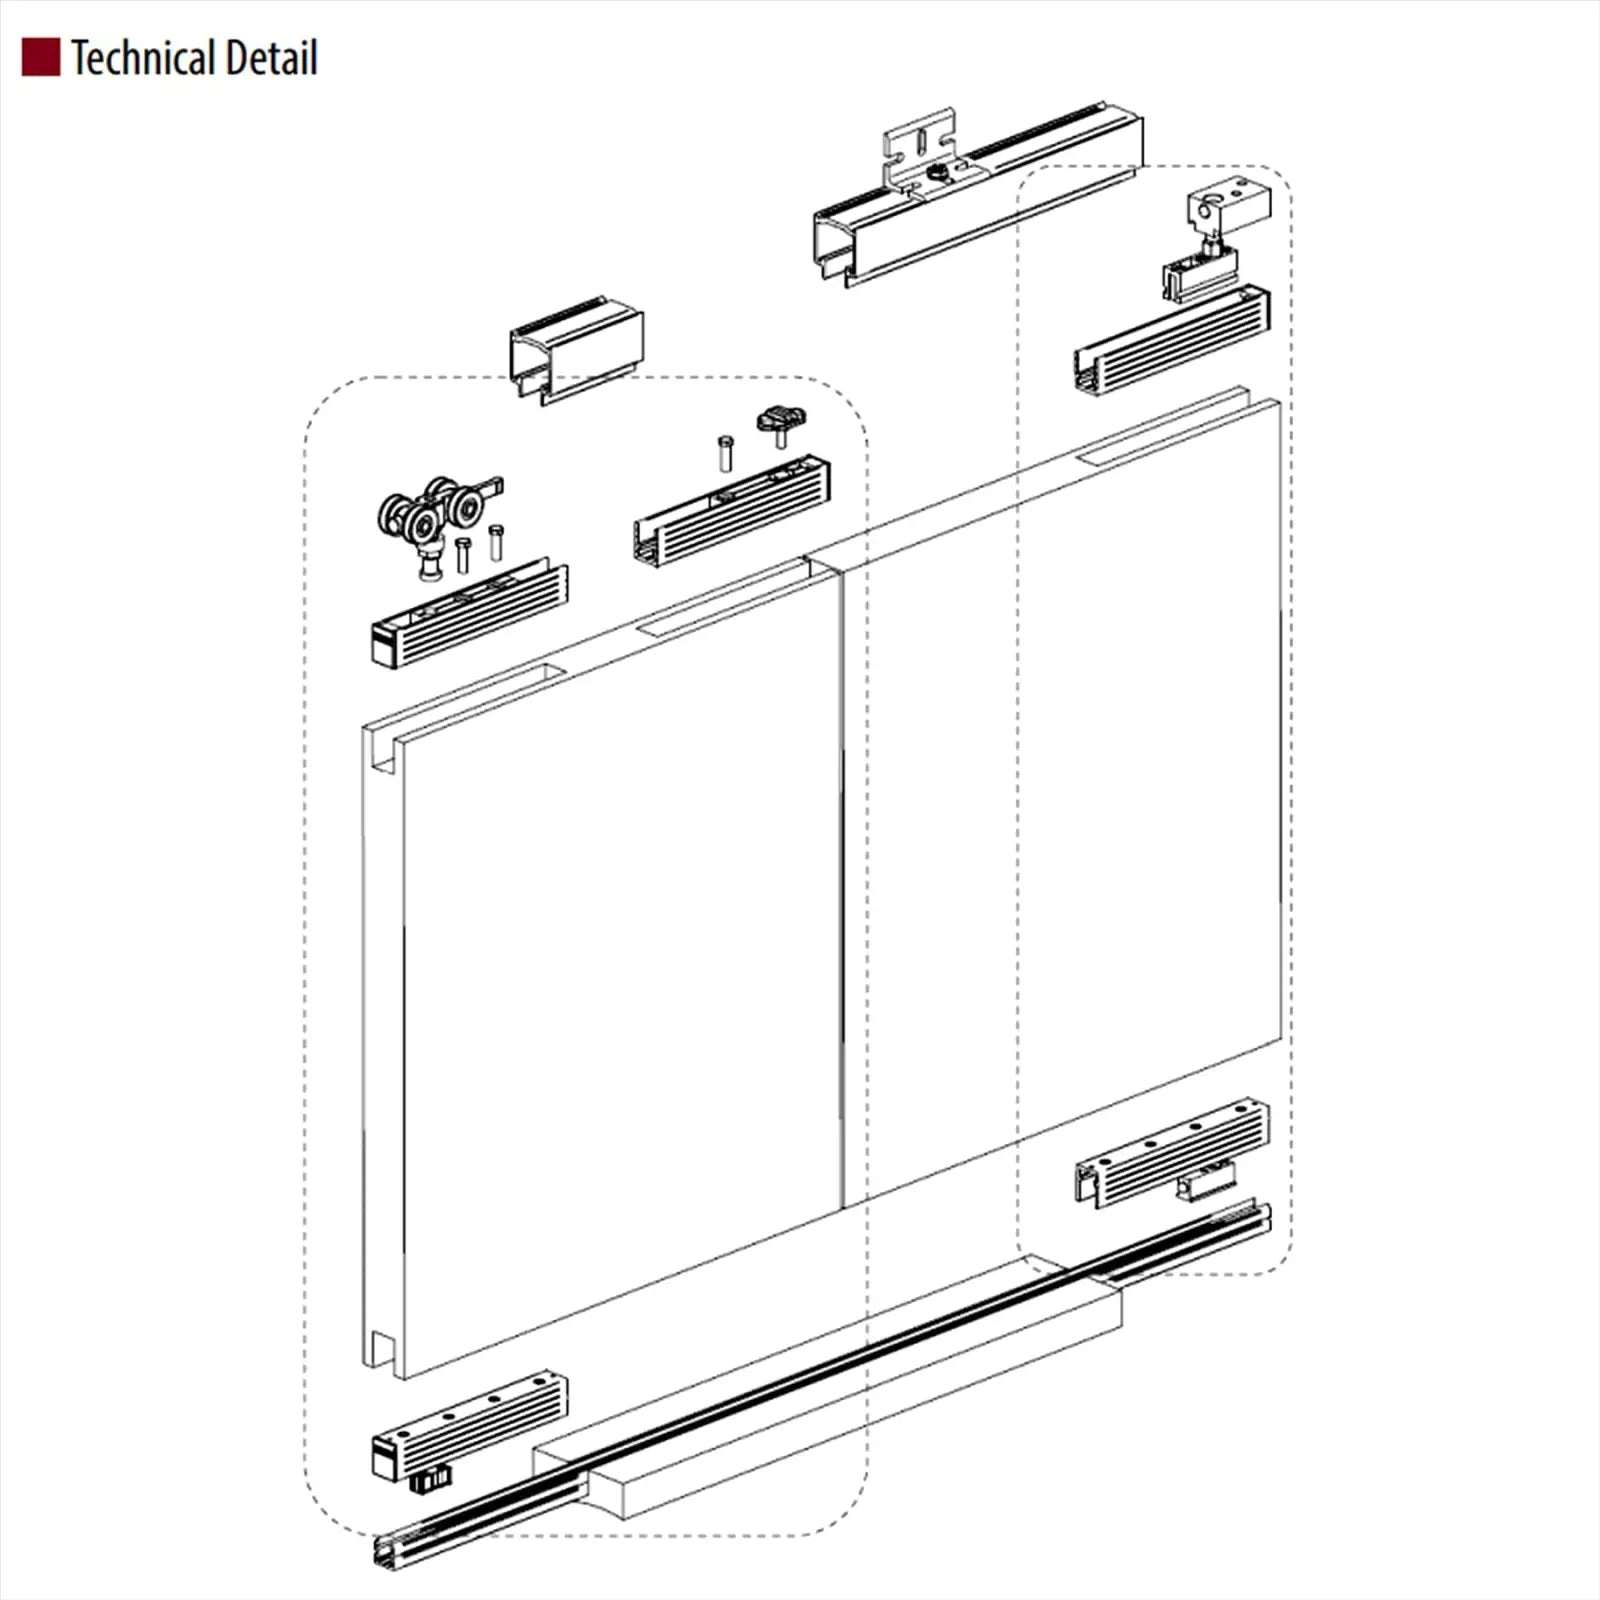 F-Slide Folding Sliding Door Kit - 5 + 1 Door - 4800mm Track - Decor And Decor